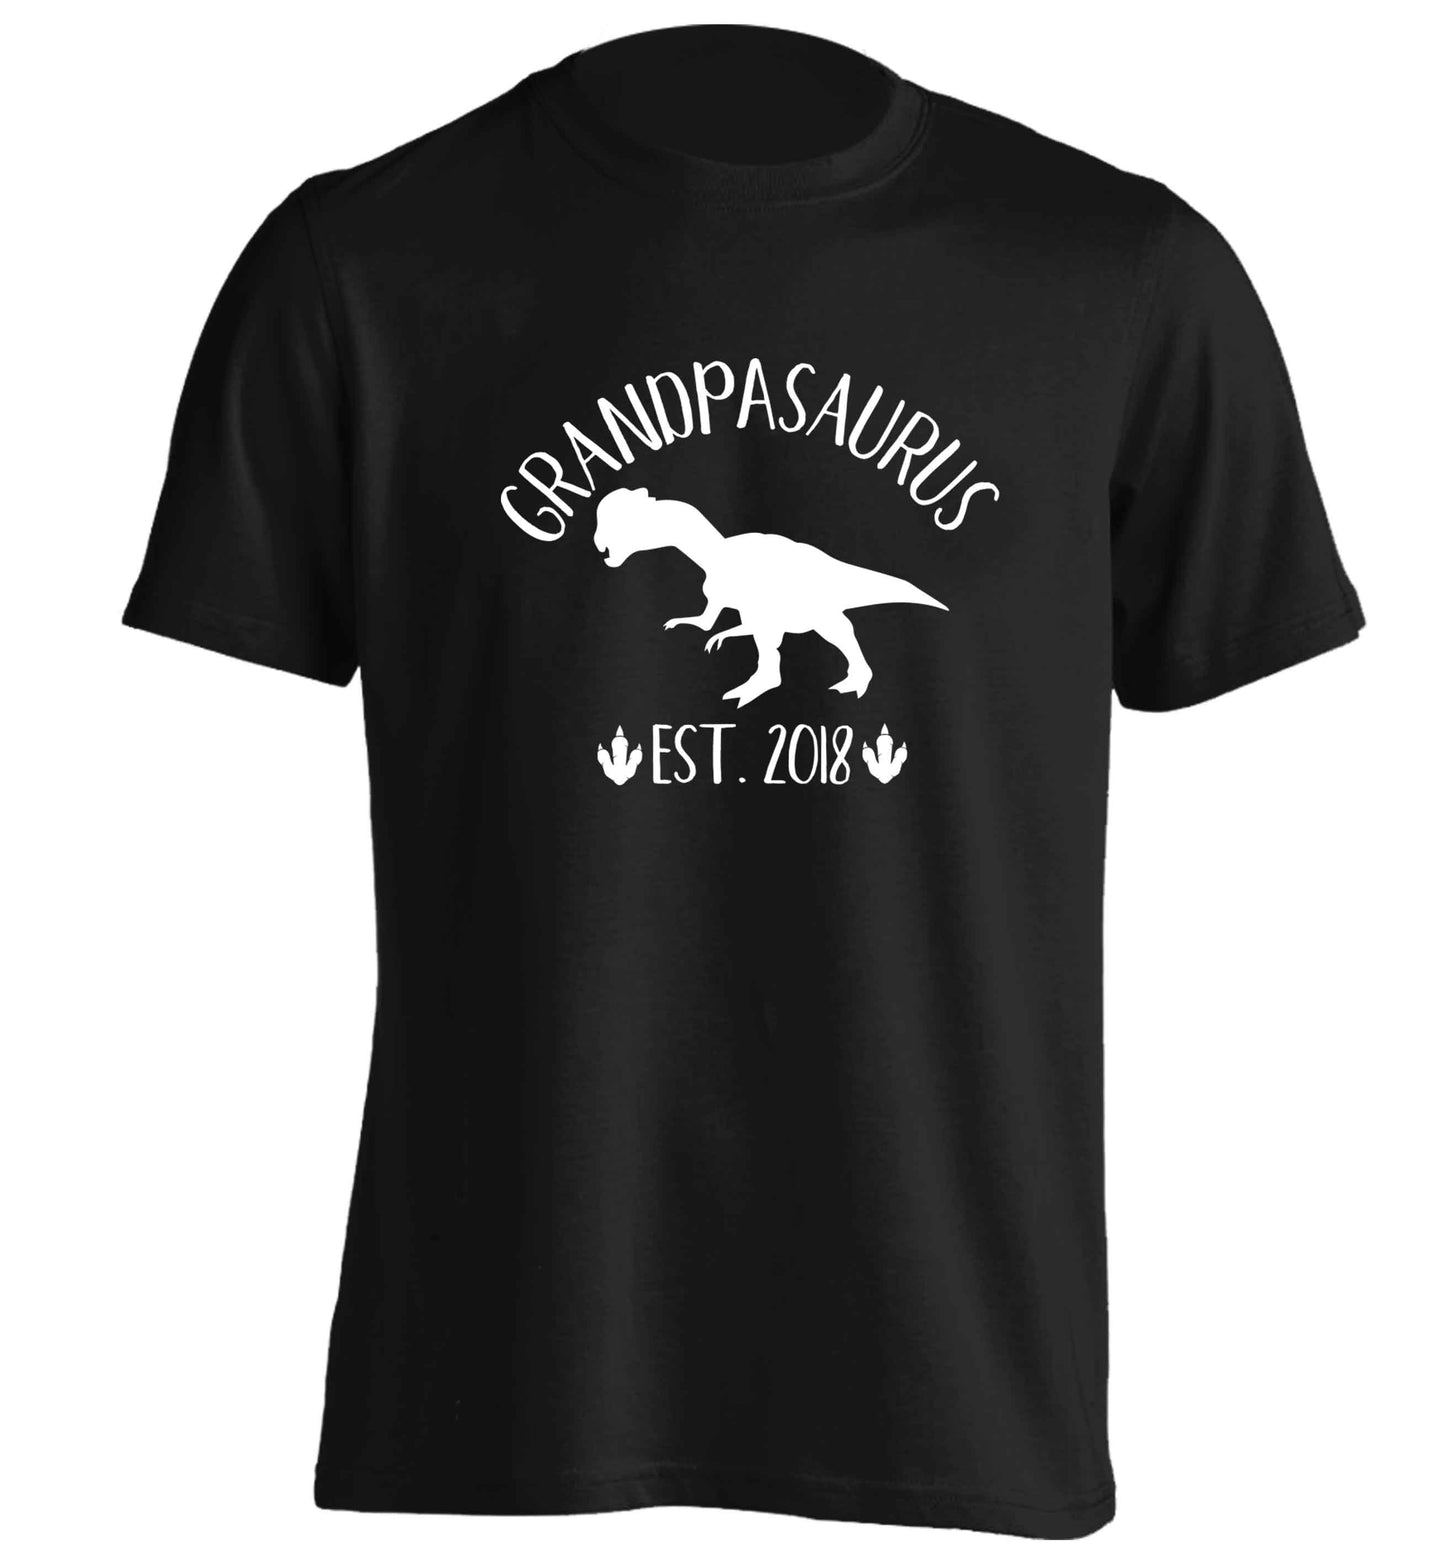 Personalised grandpasaurus since (custom date) adults unisex black Tshirt 2XL